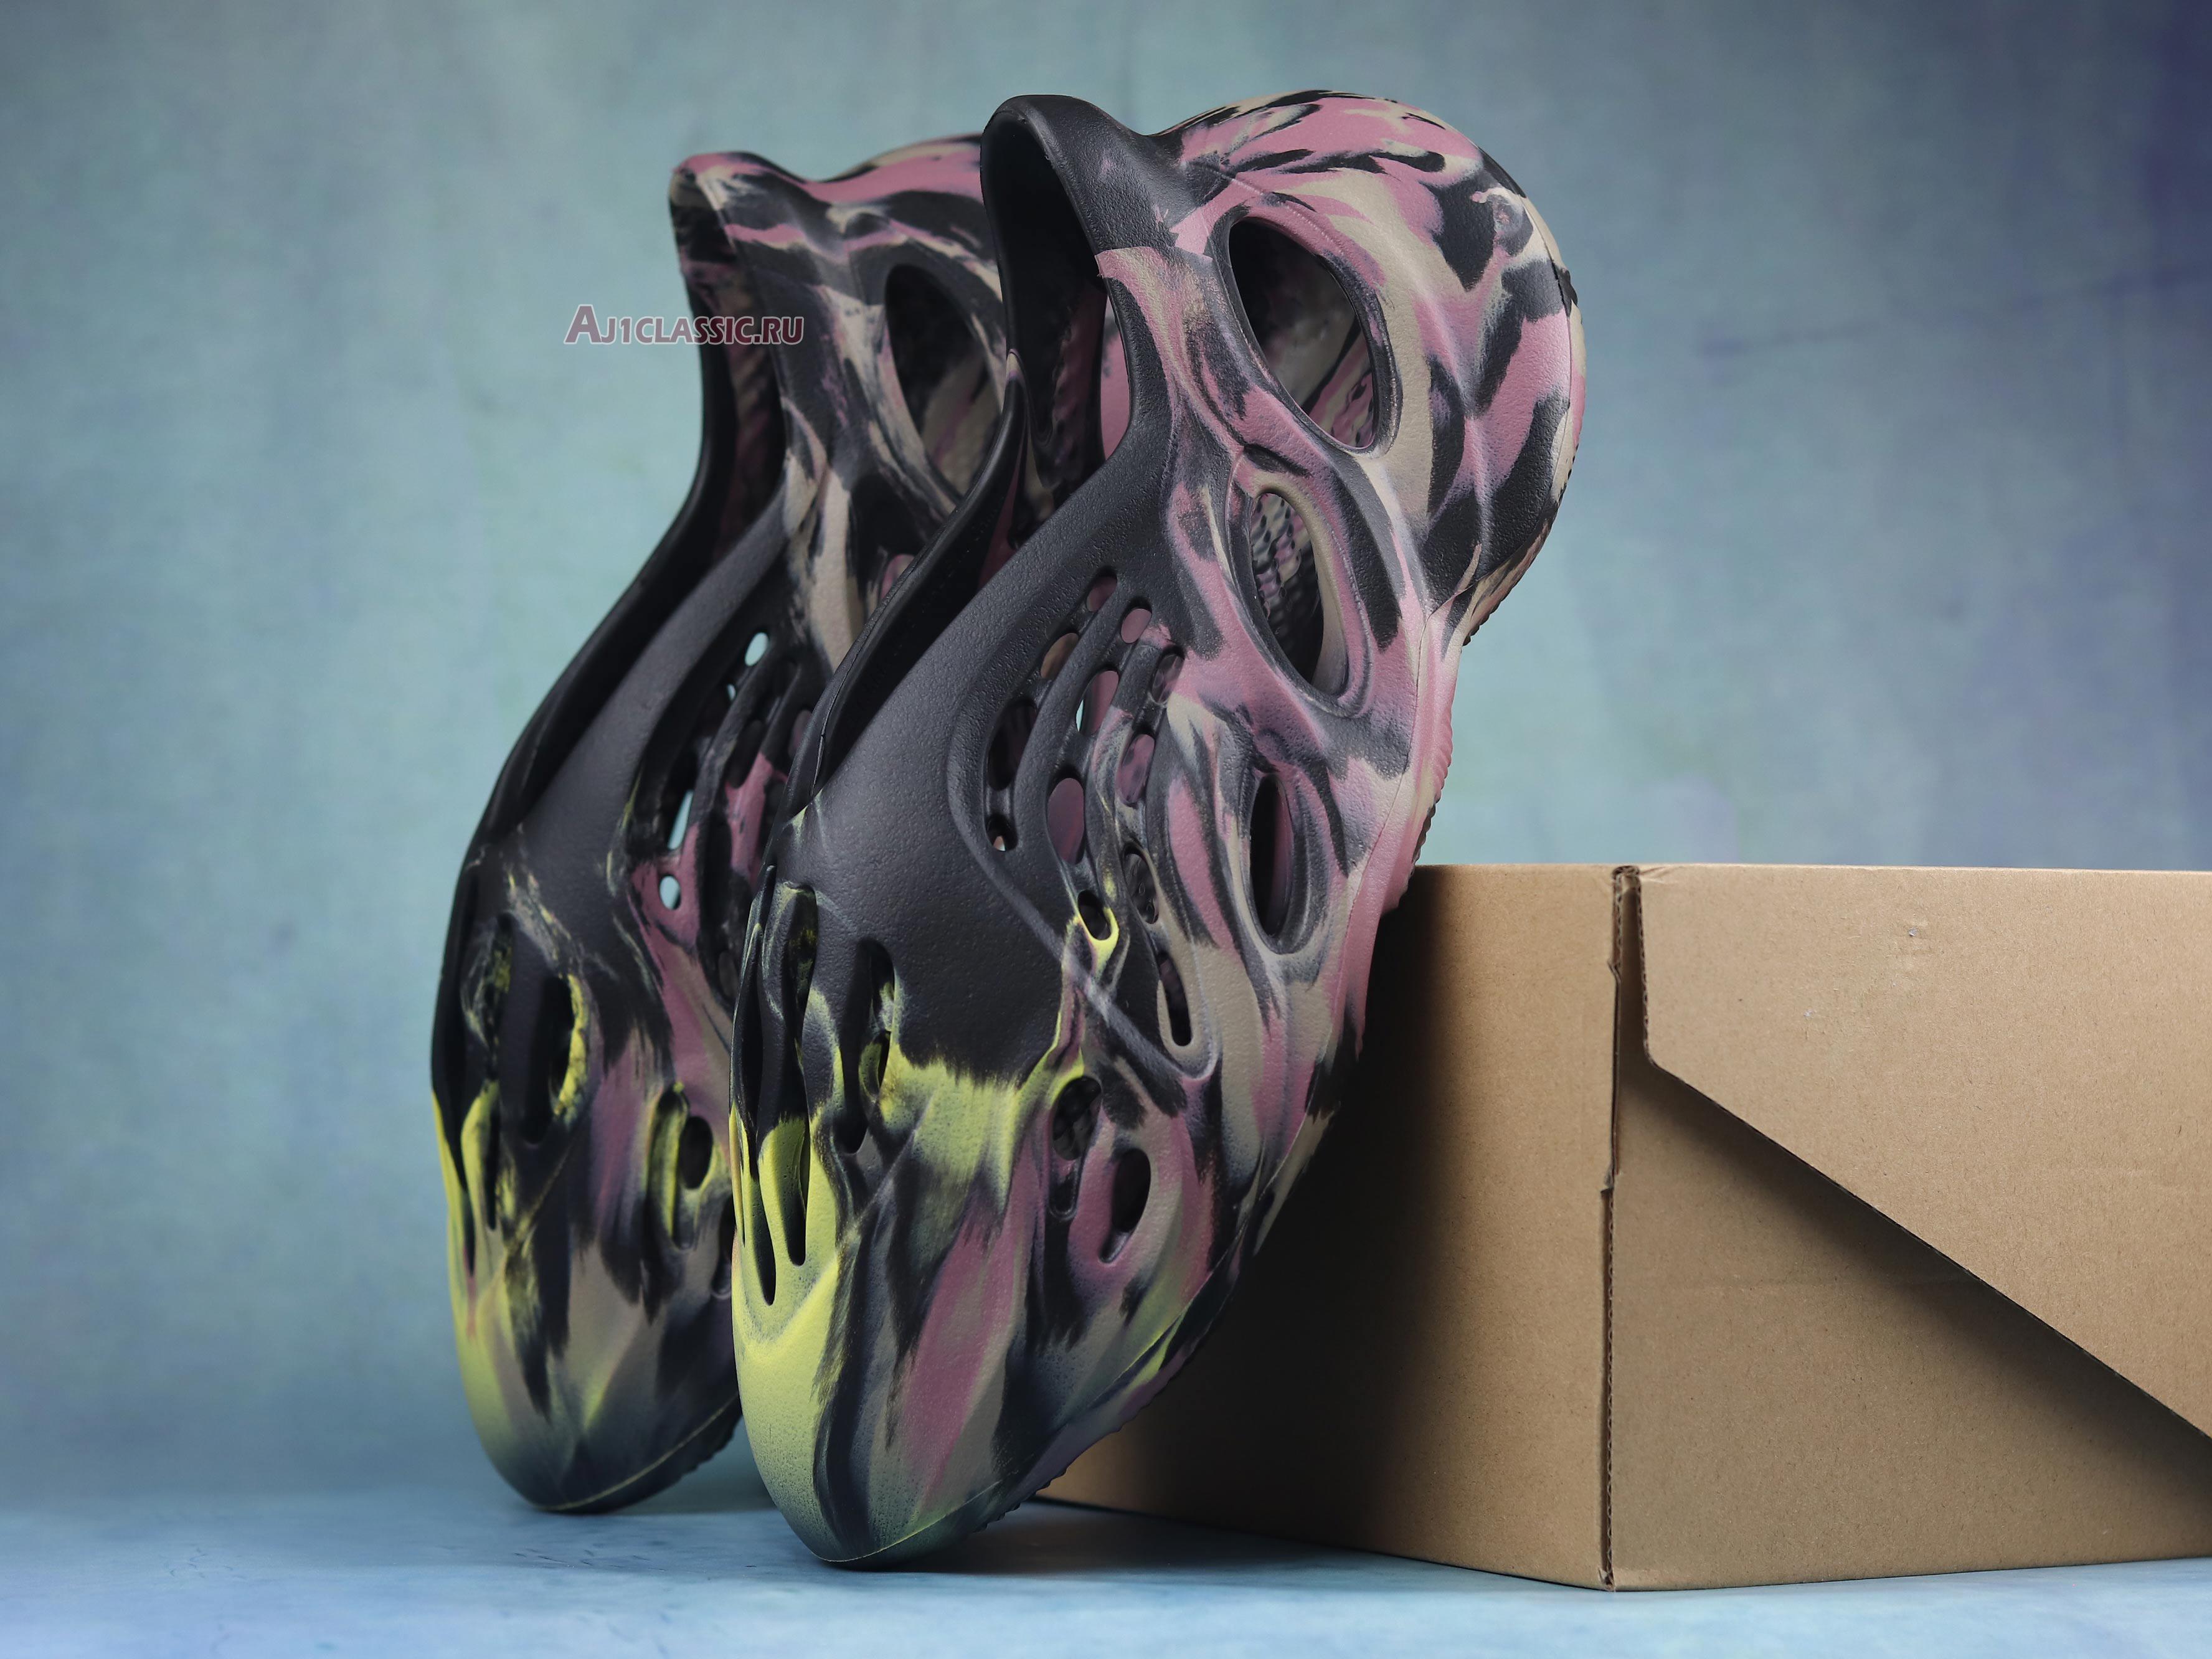 Adidas Yeezy Foam Runner MX Carbon IG9562 Mx Carbon/Mx Carbon/Mx Carbon Sneakers